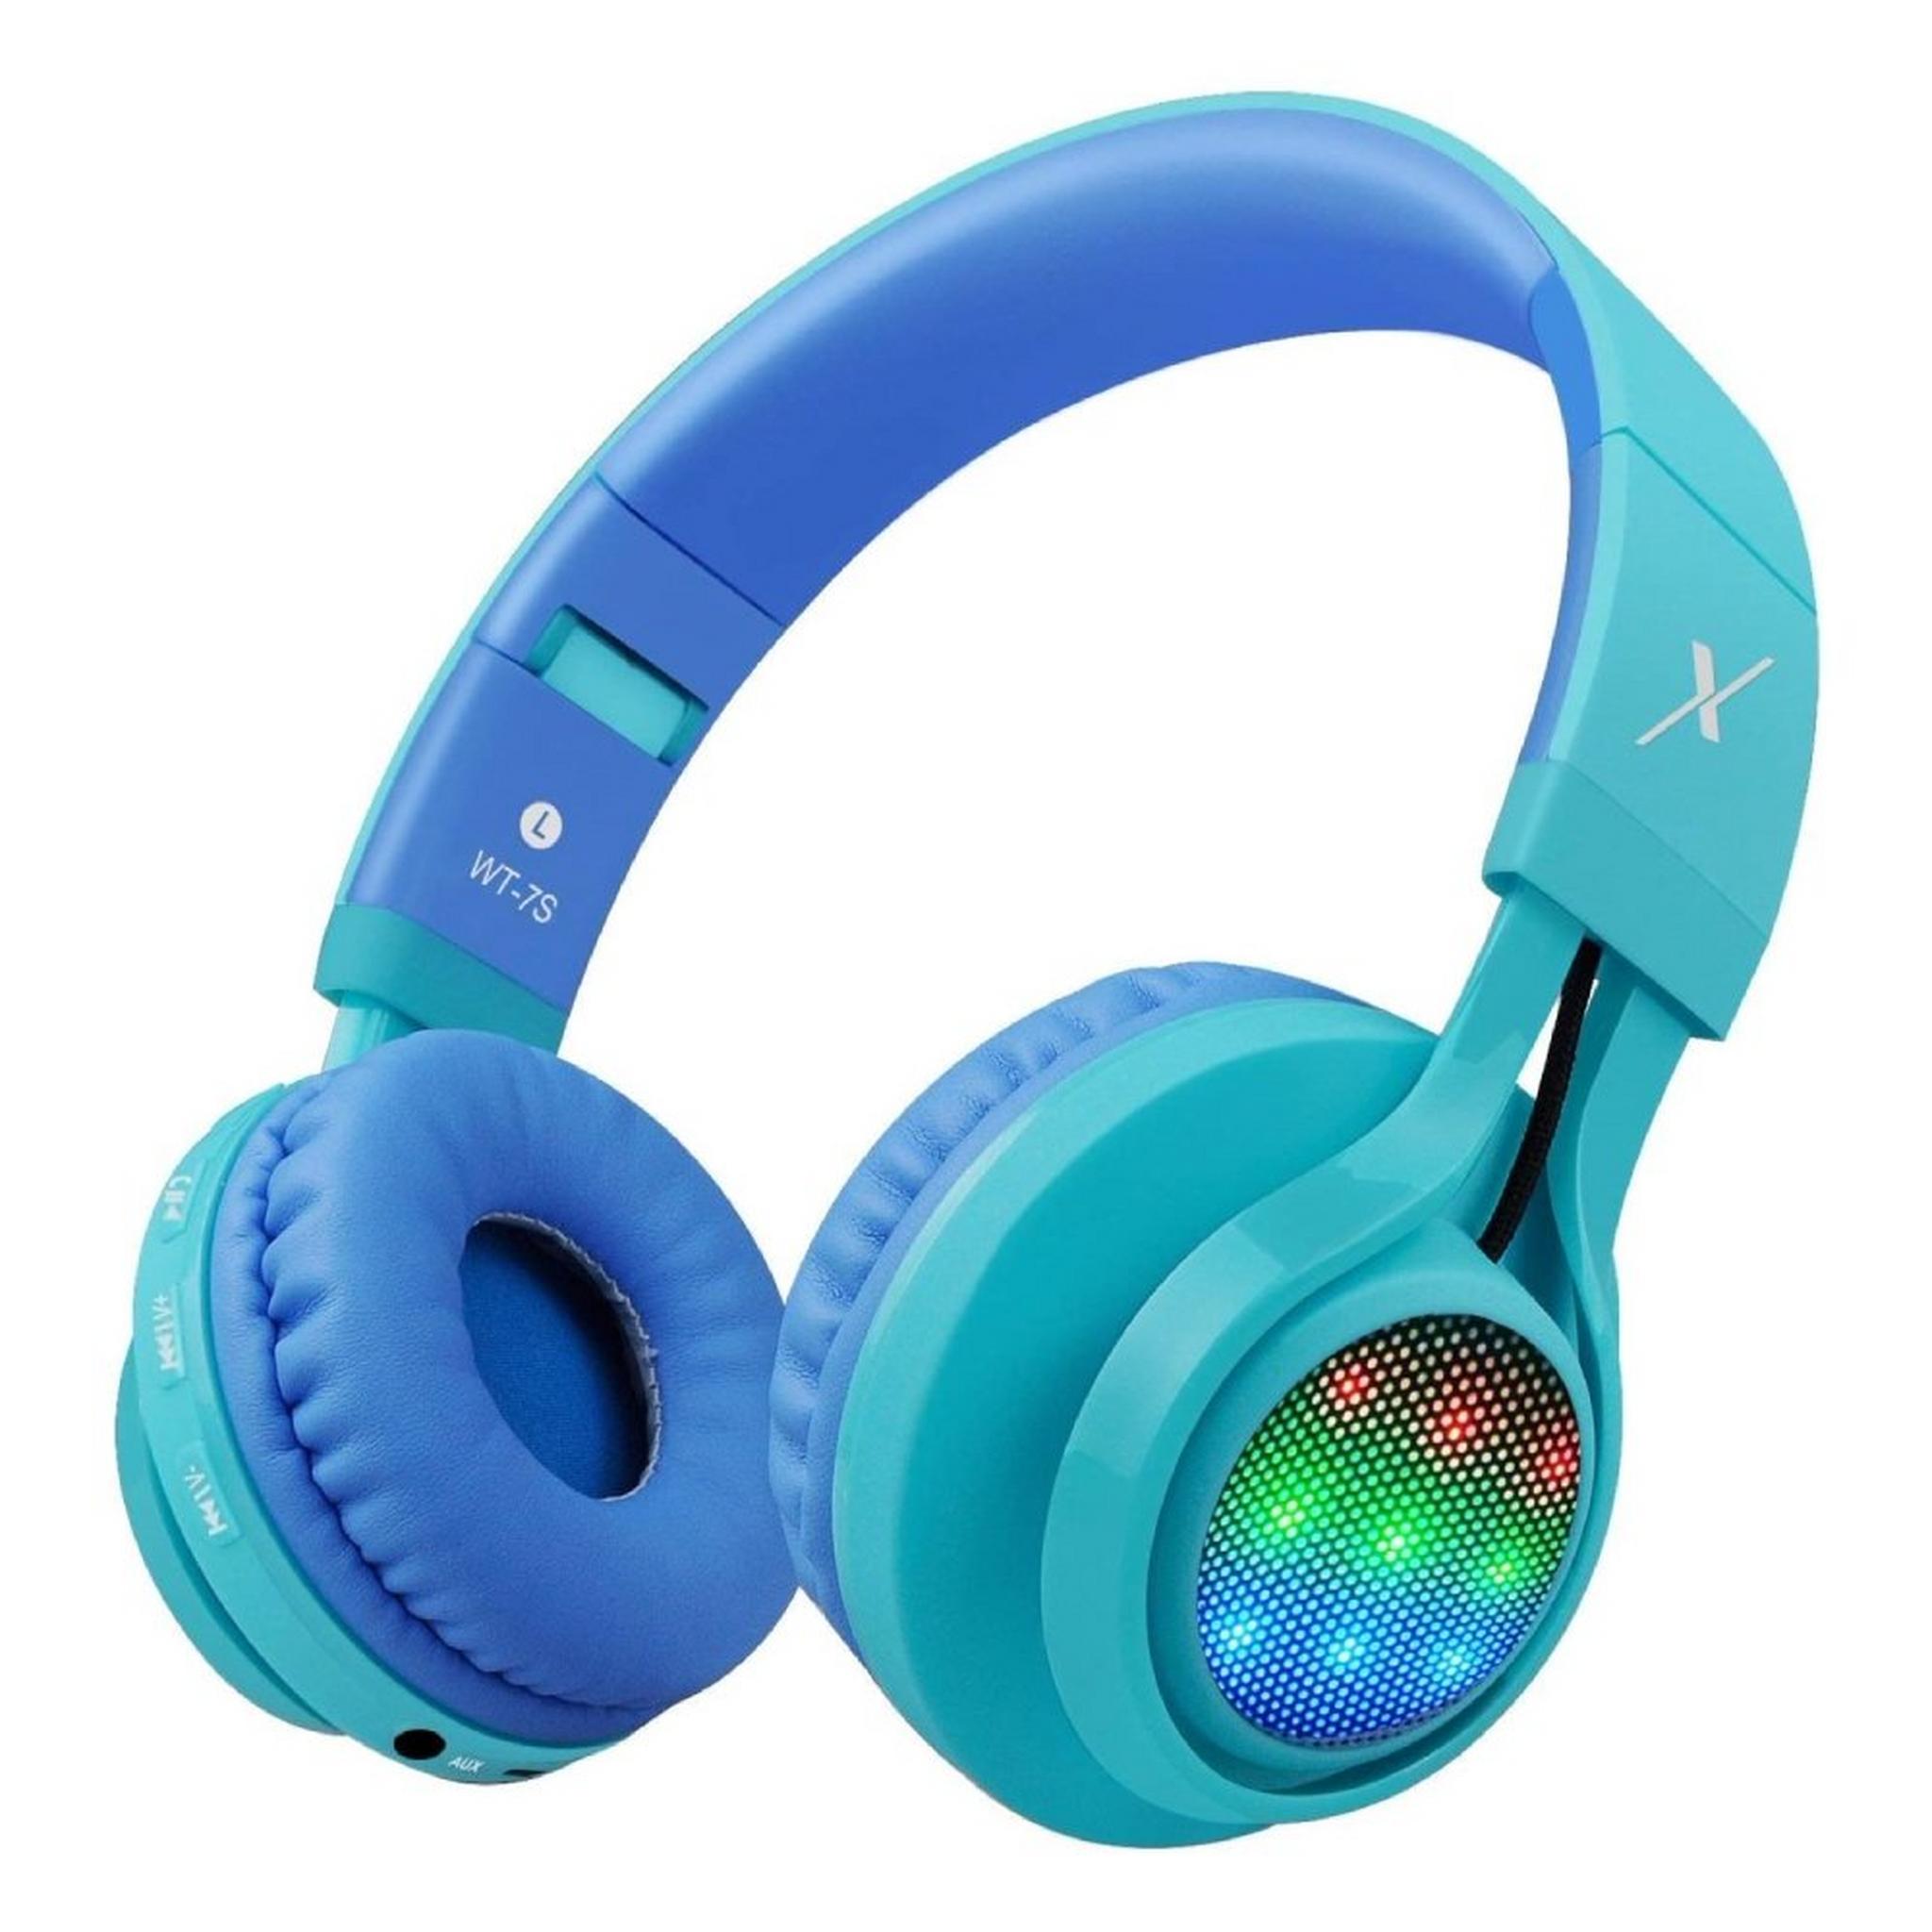 Riwbox Kids LED Wireless Headphones - Blue/Green